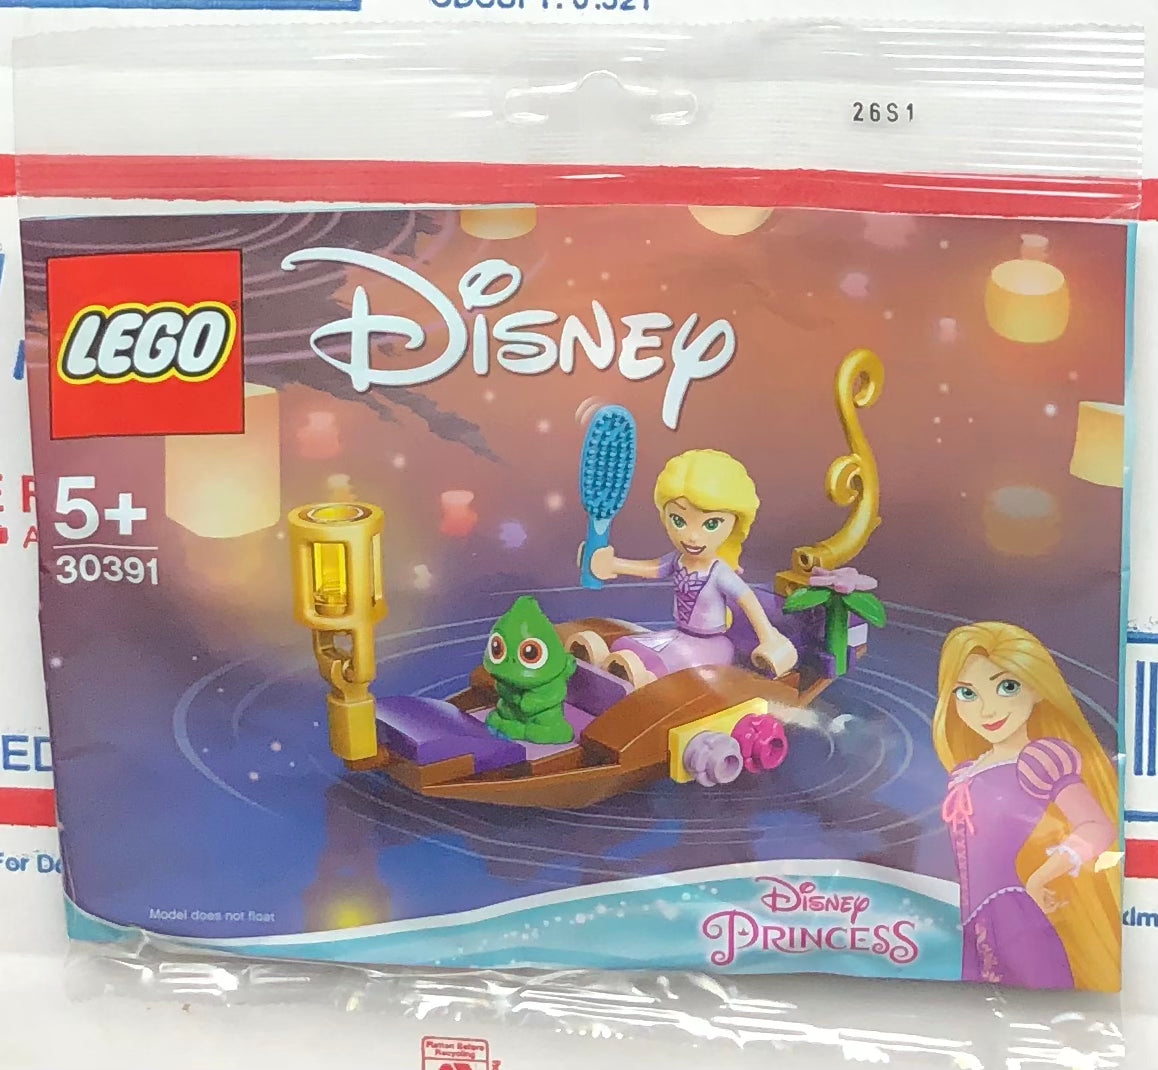 LEGO Disney Princess Rapunzel’s Boat Polybag Set 30391